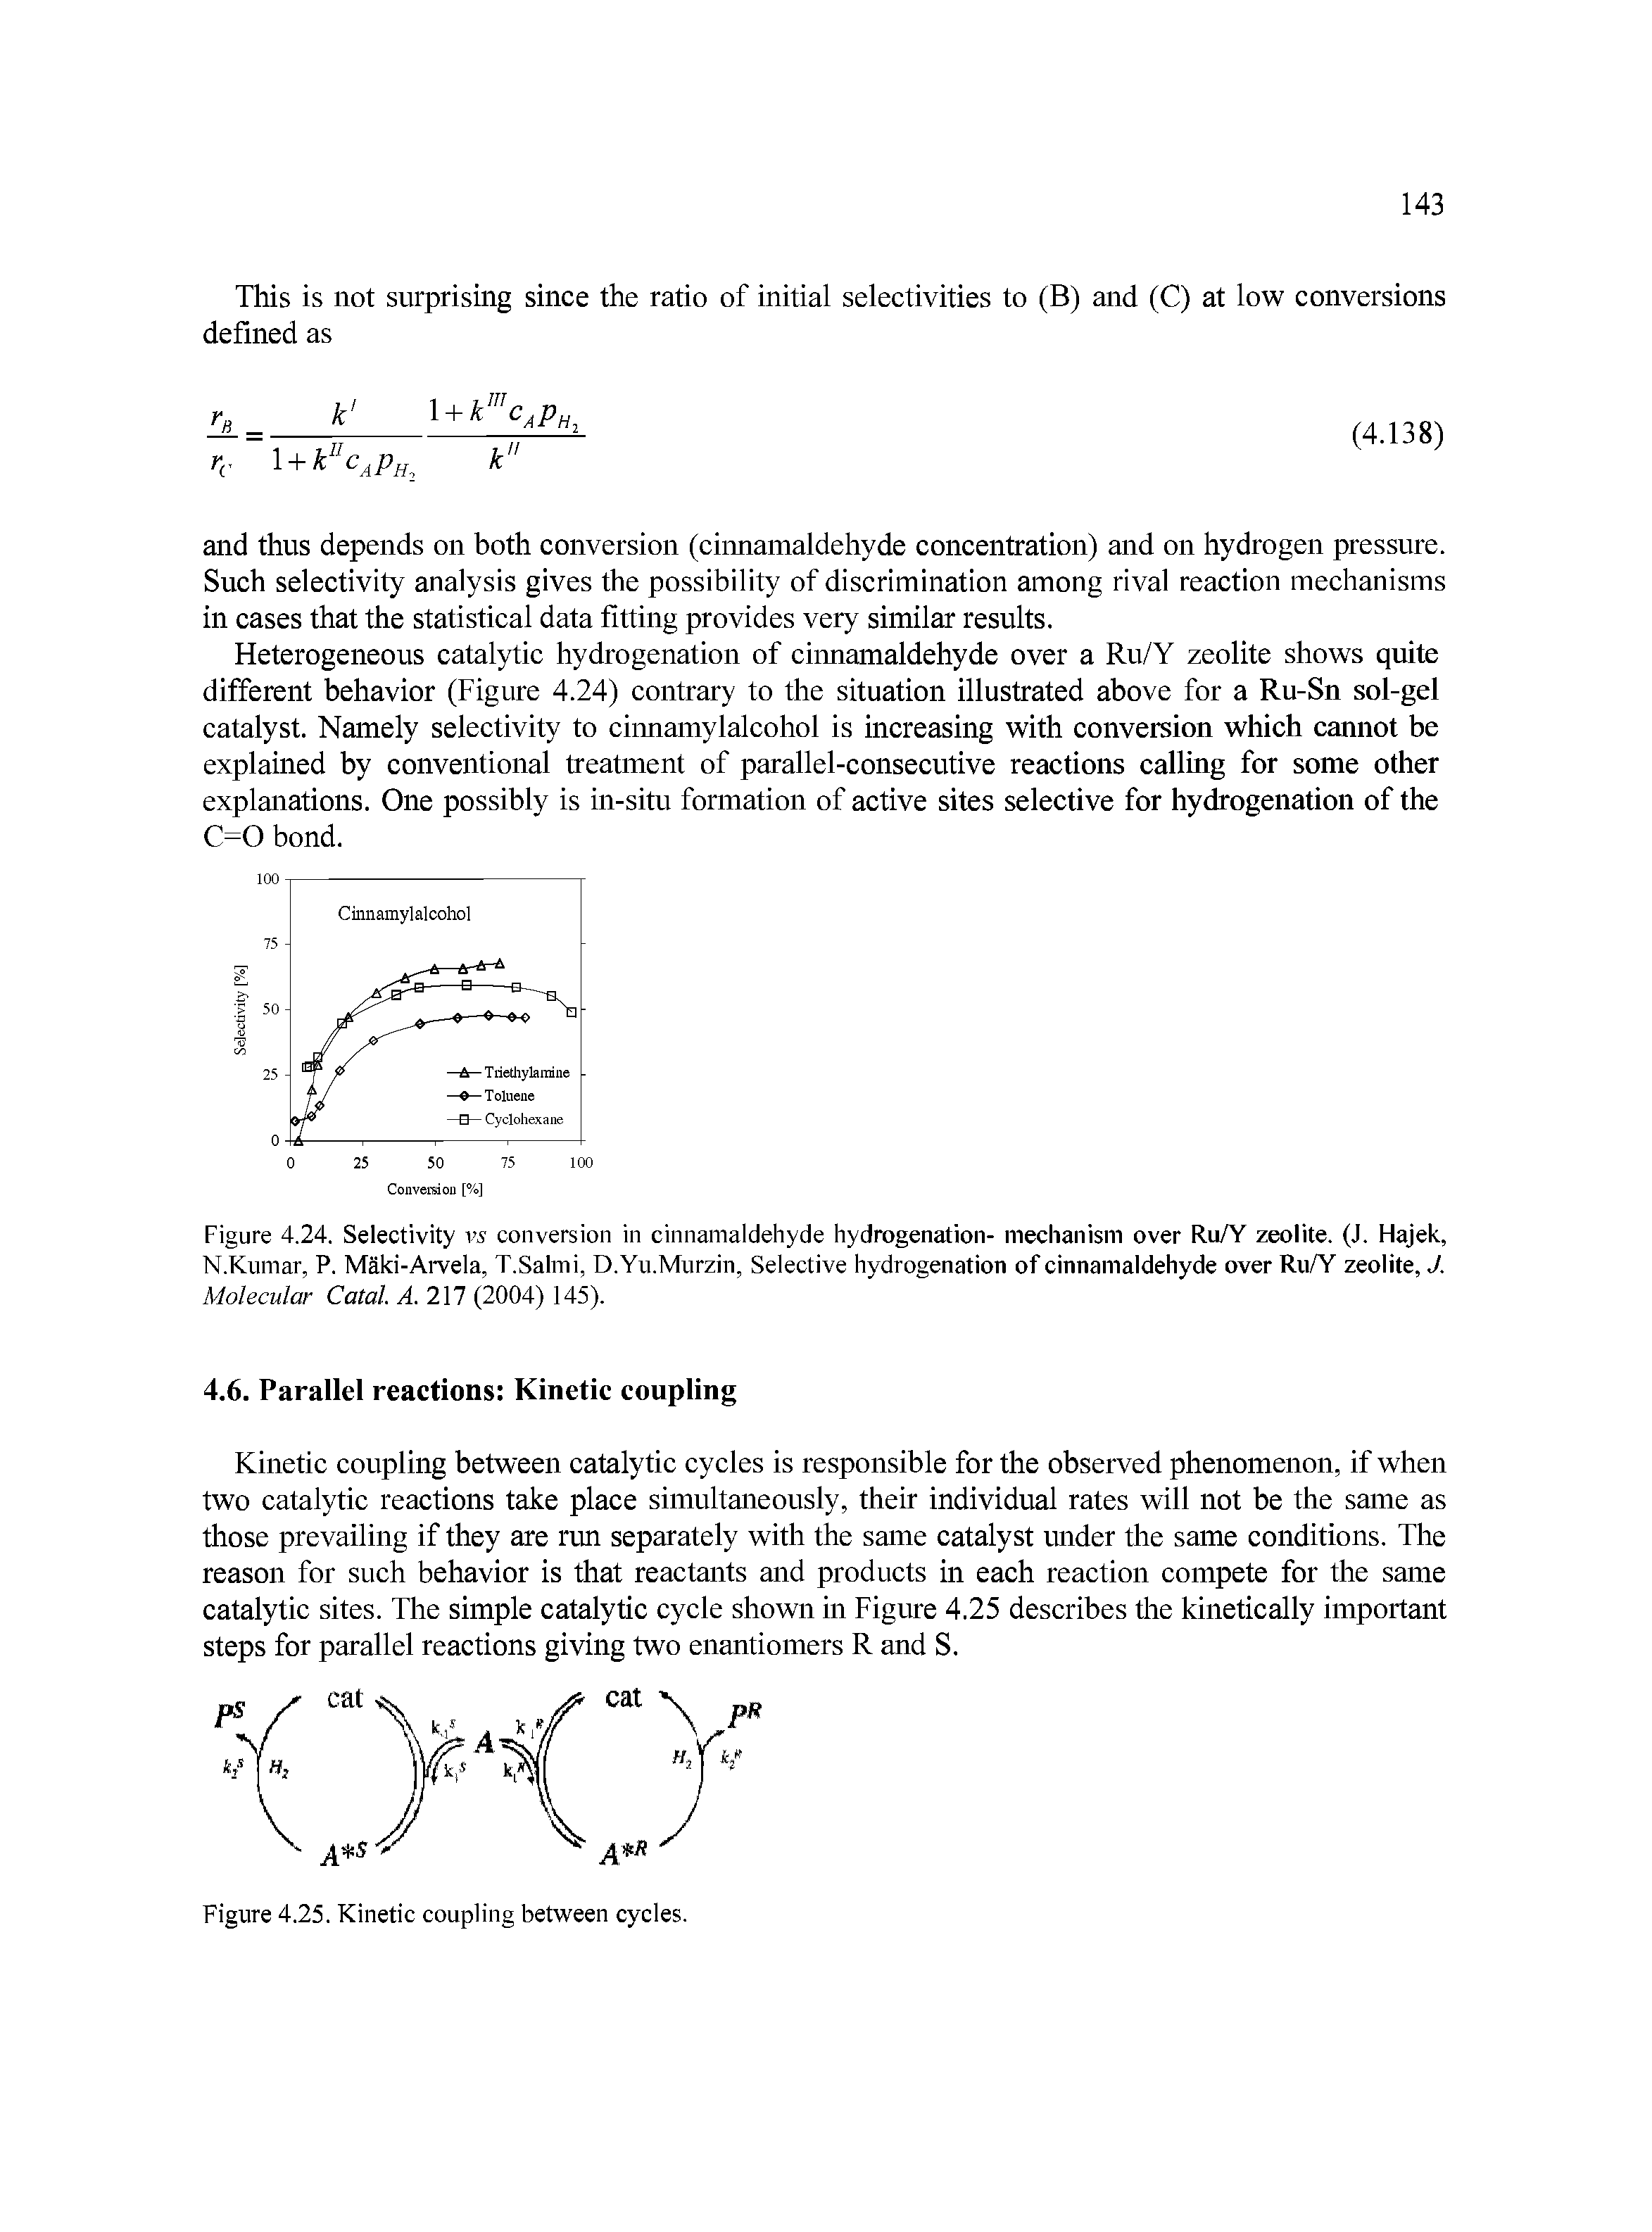 Figure 4.24. Selectivity vs conversion in cinnamaldehyde hydrogenation- mechanism over Ru/Y zeolite. (J. Hajek, N.Kumar, P. Maki-Arvela, T.Salmi, D.Yu.Murzin, Selective hydrogenation of cinnamaldehyde over Ru/Y zeolite, J. Molecular Catal. A. 217 (2004) 145).